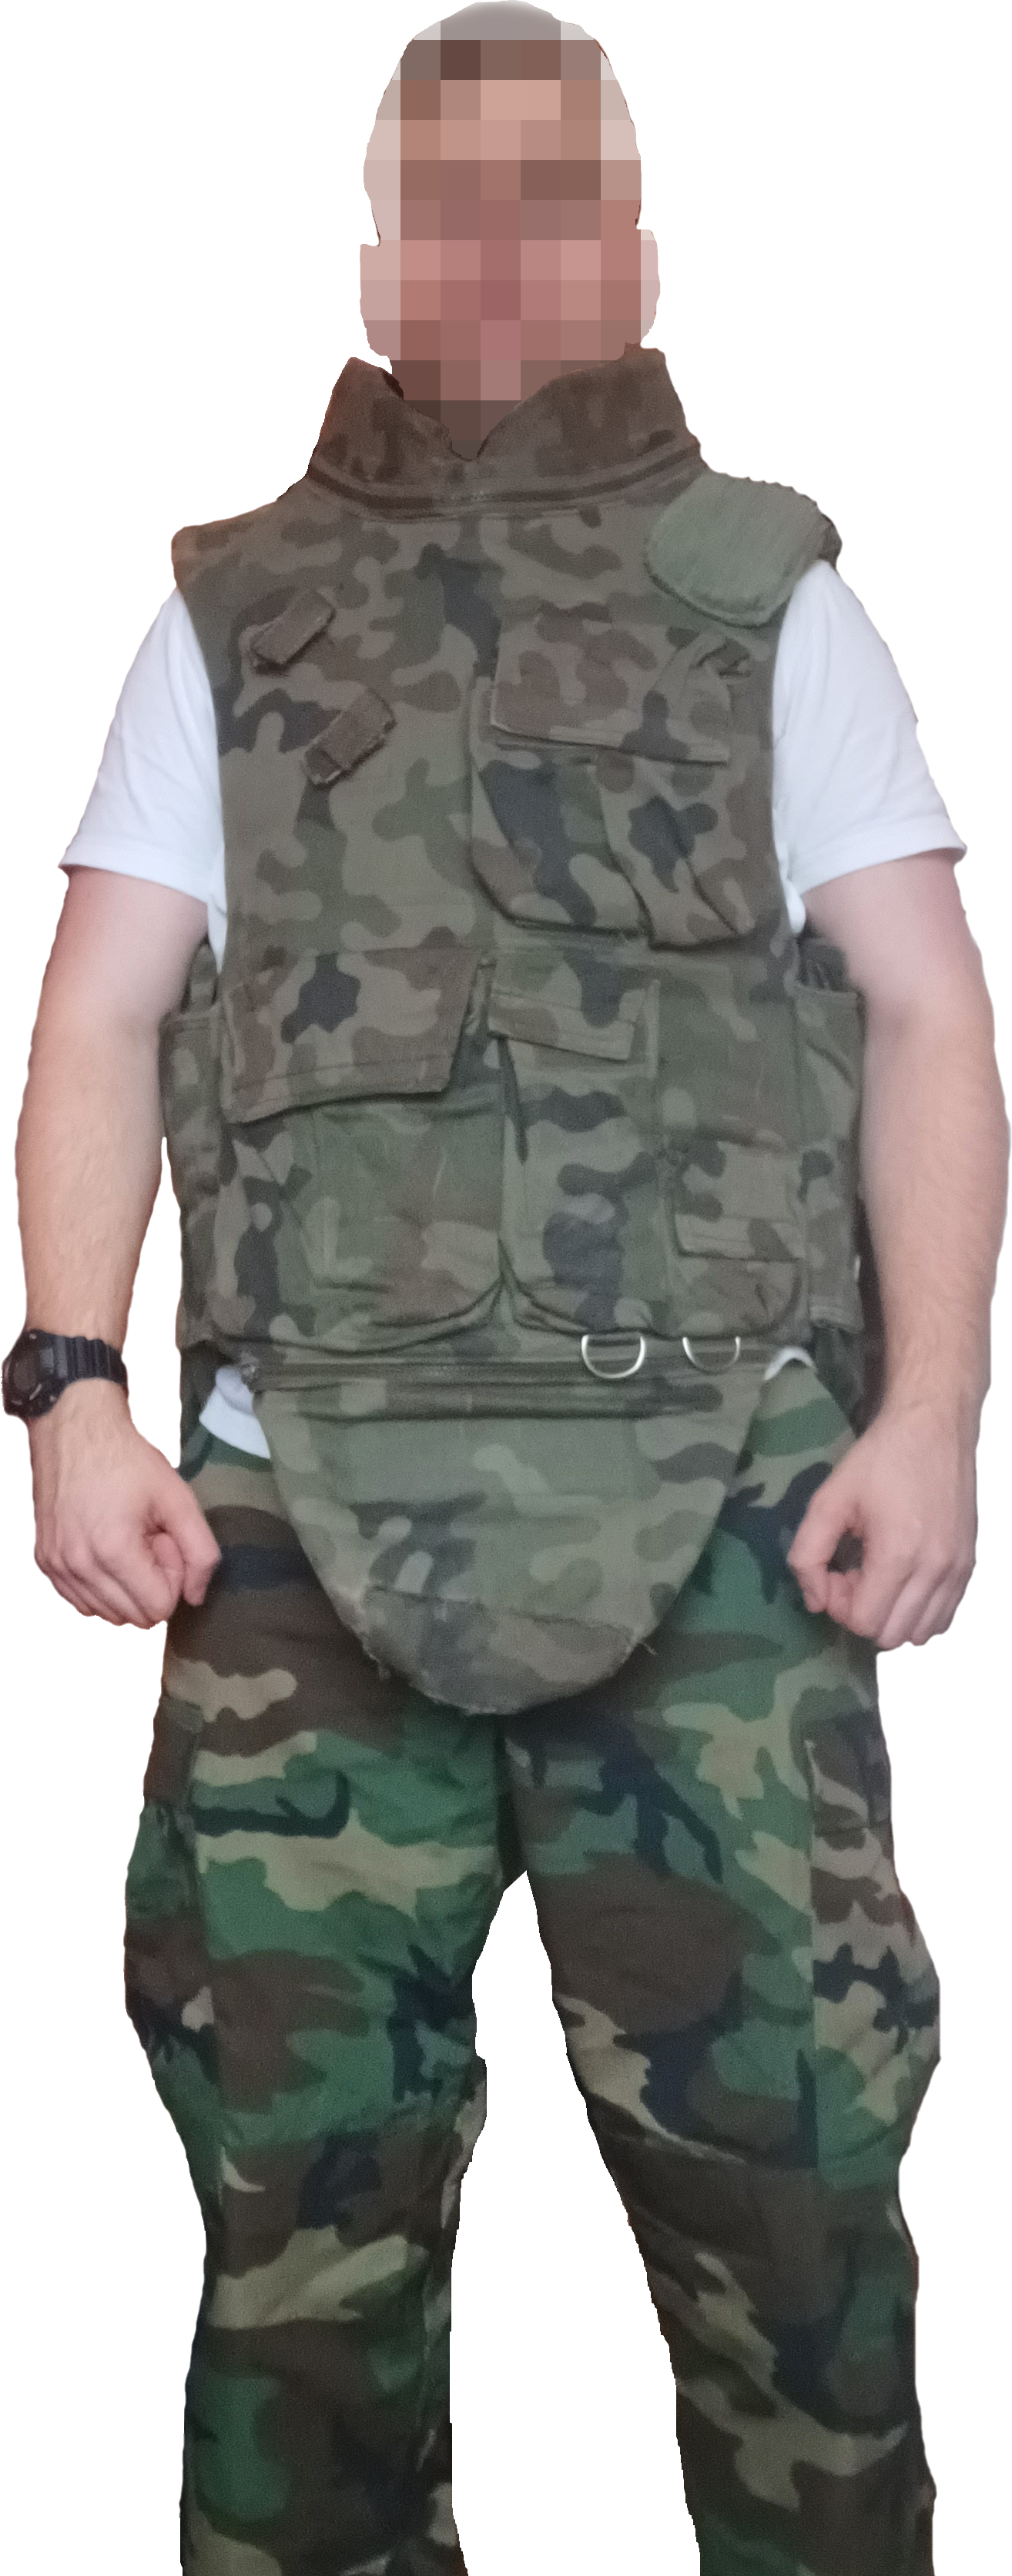 1990s Polish body armor vest - OCHRA Ochra-akm-front